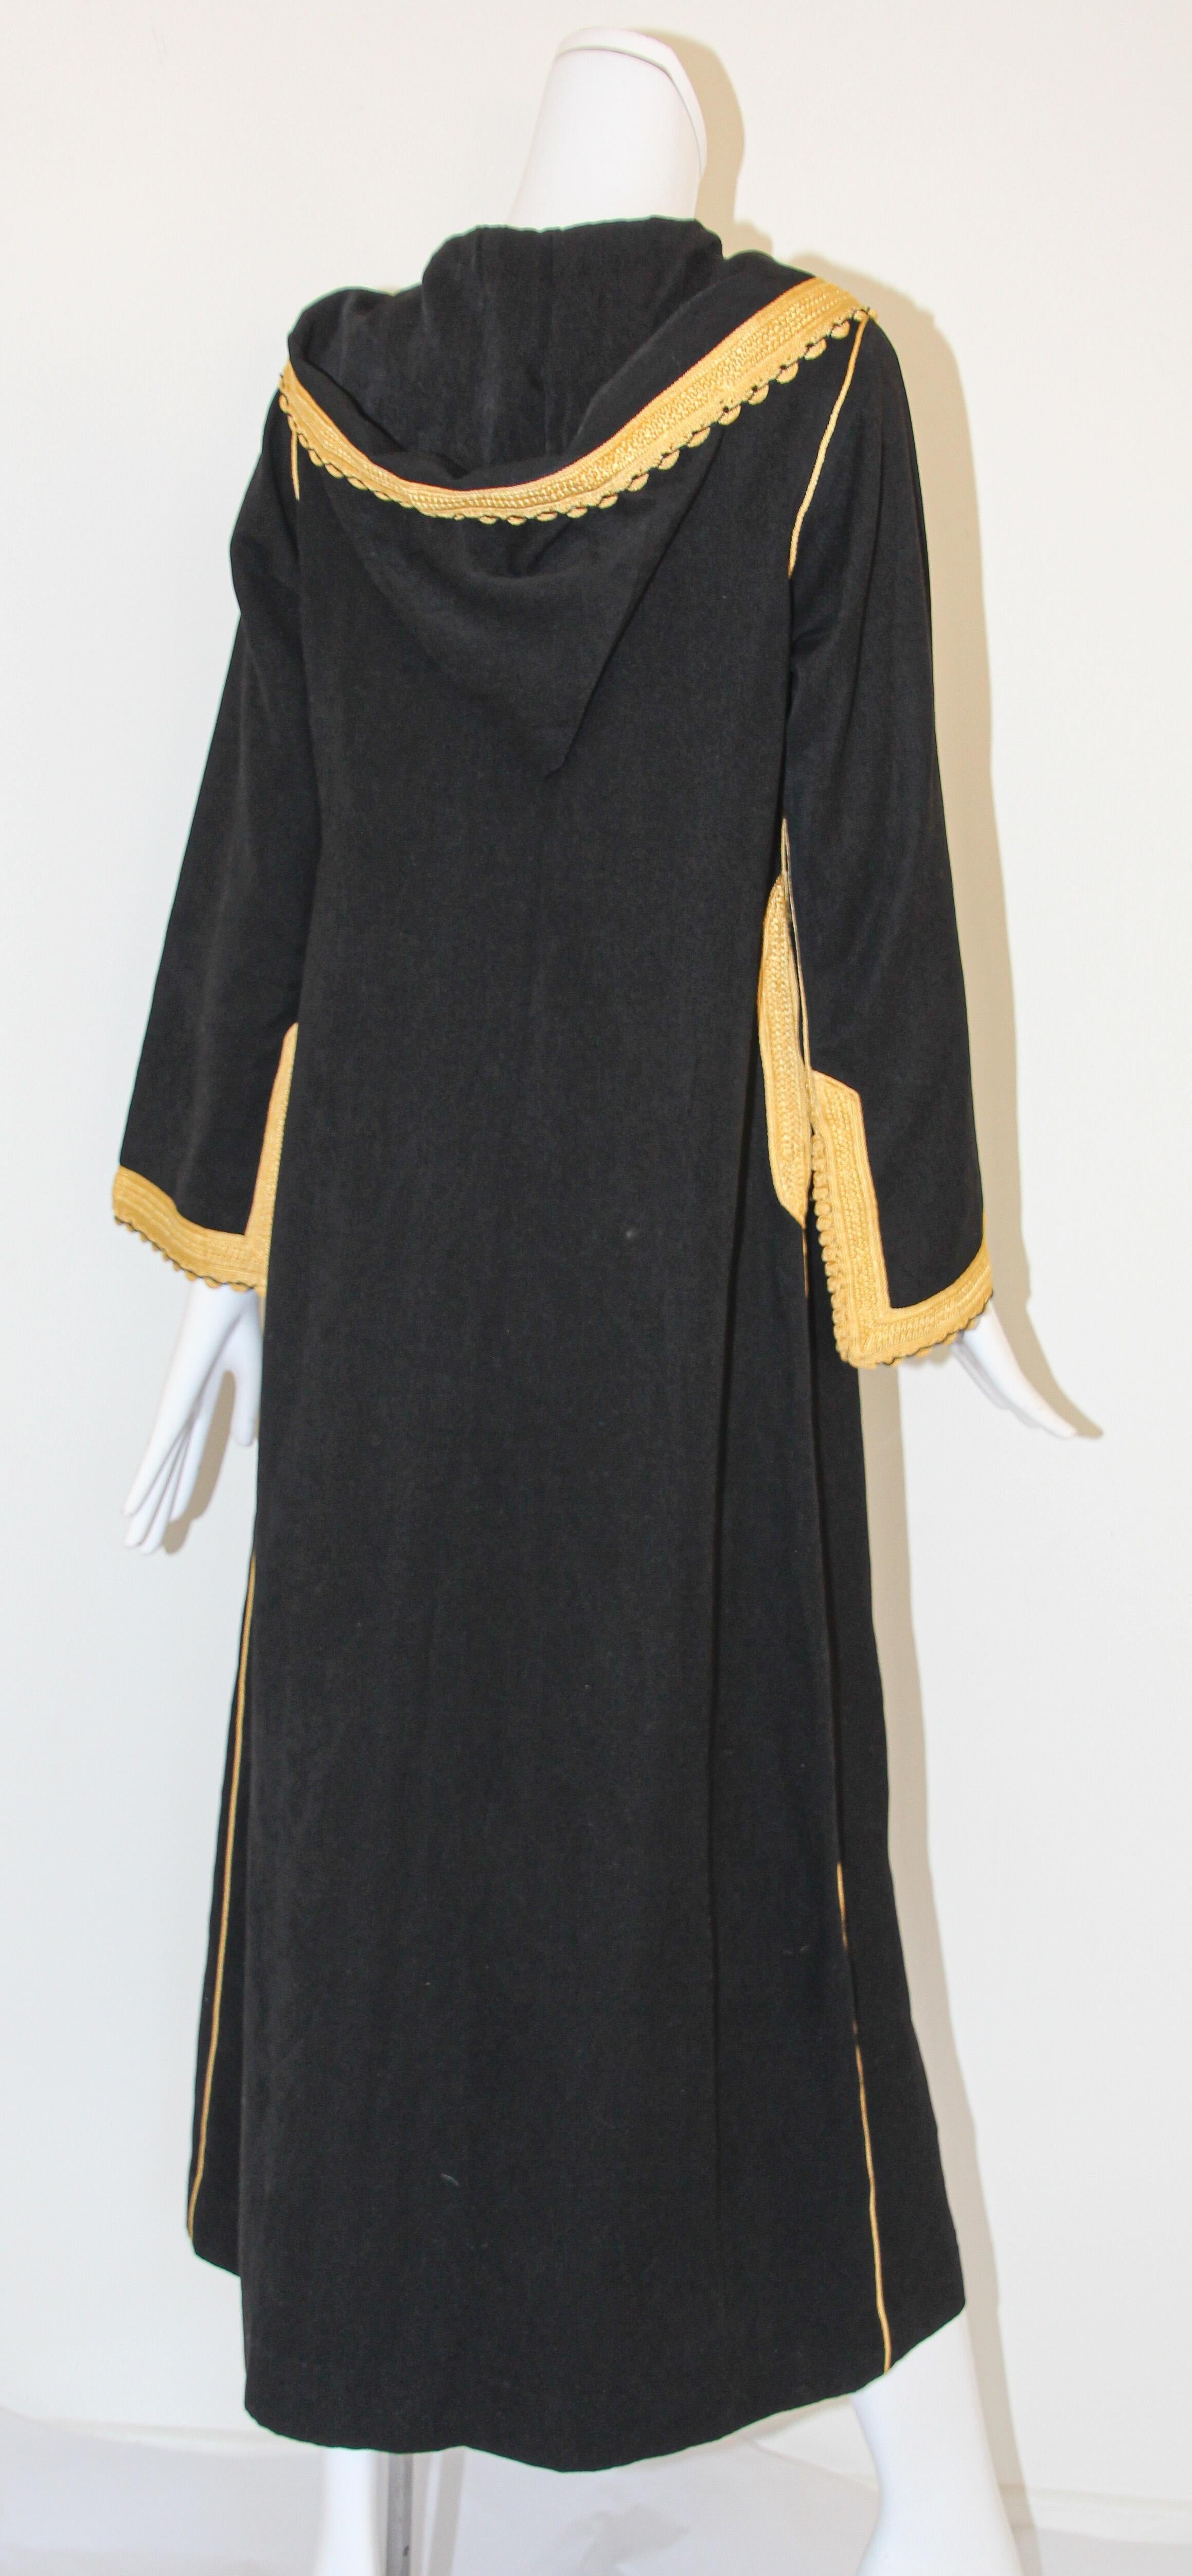 Vintage Moroccan Caftan, Hooded Black and Gold Trim Kaftan Circa 1970's For Sale 3